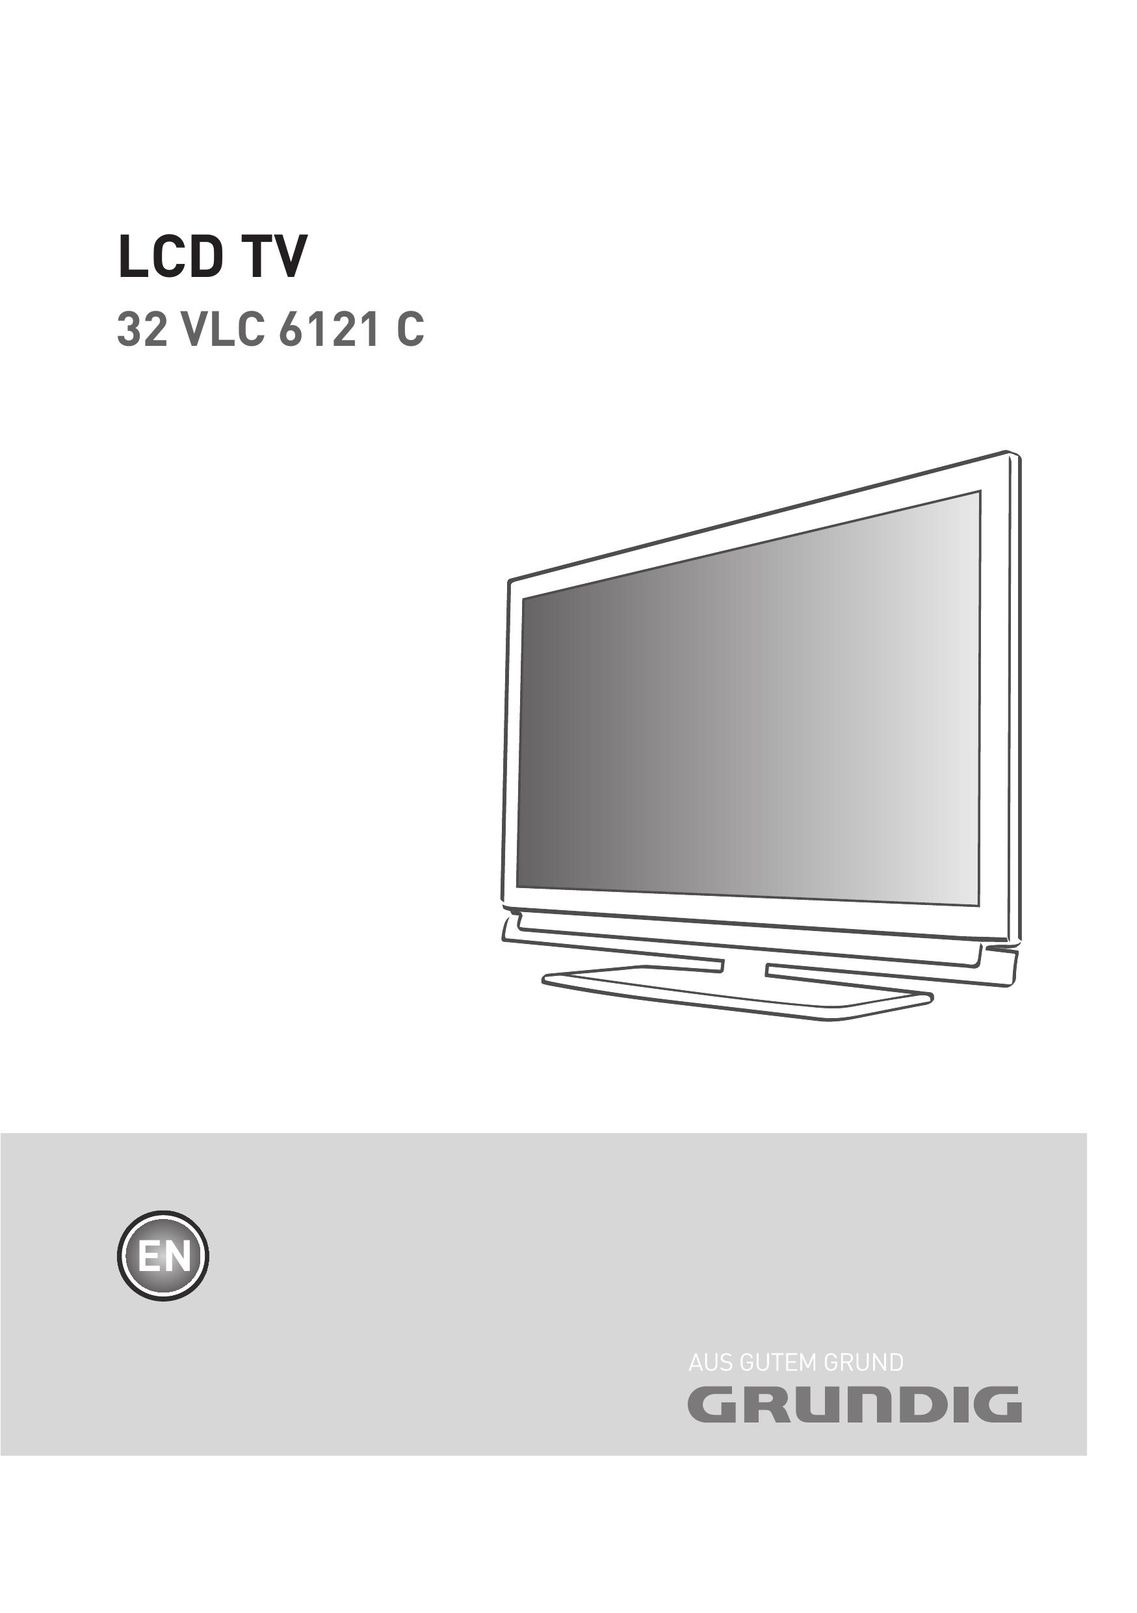 Grundig 32 VLC 6121 C Flat Panel Television User Manual